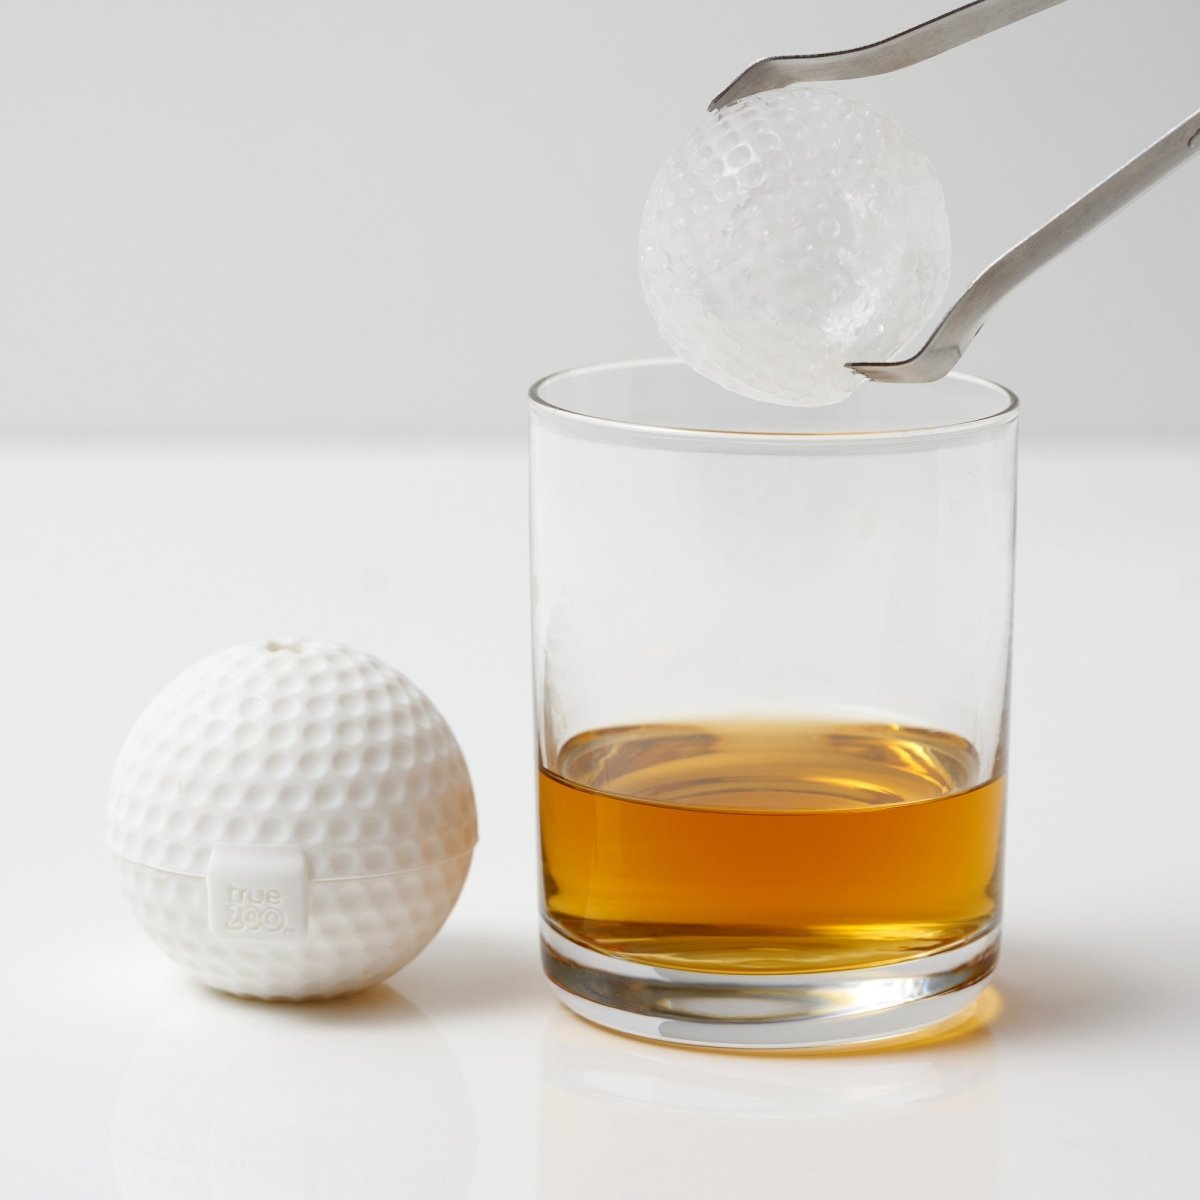 Ice Mold, Golf Ball